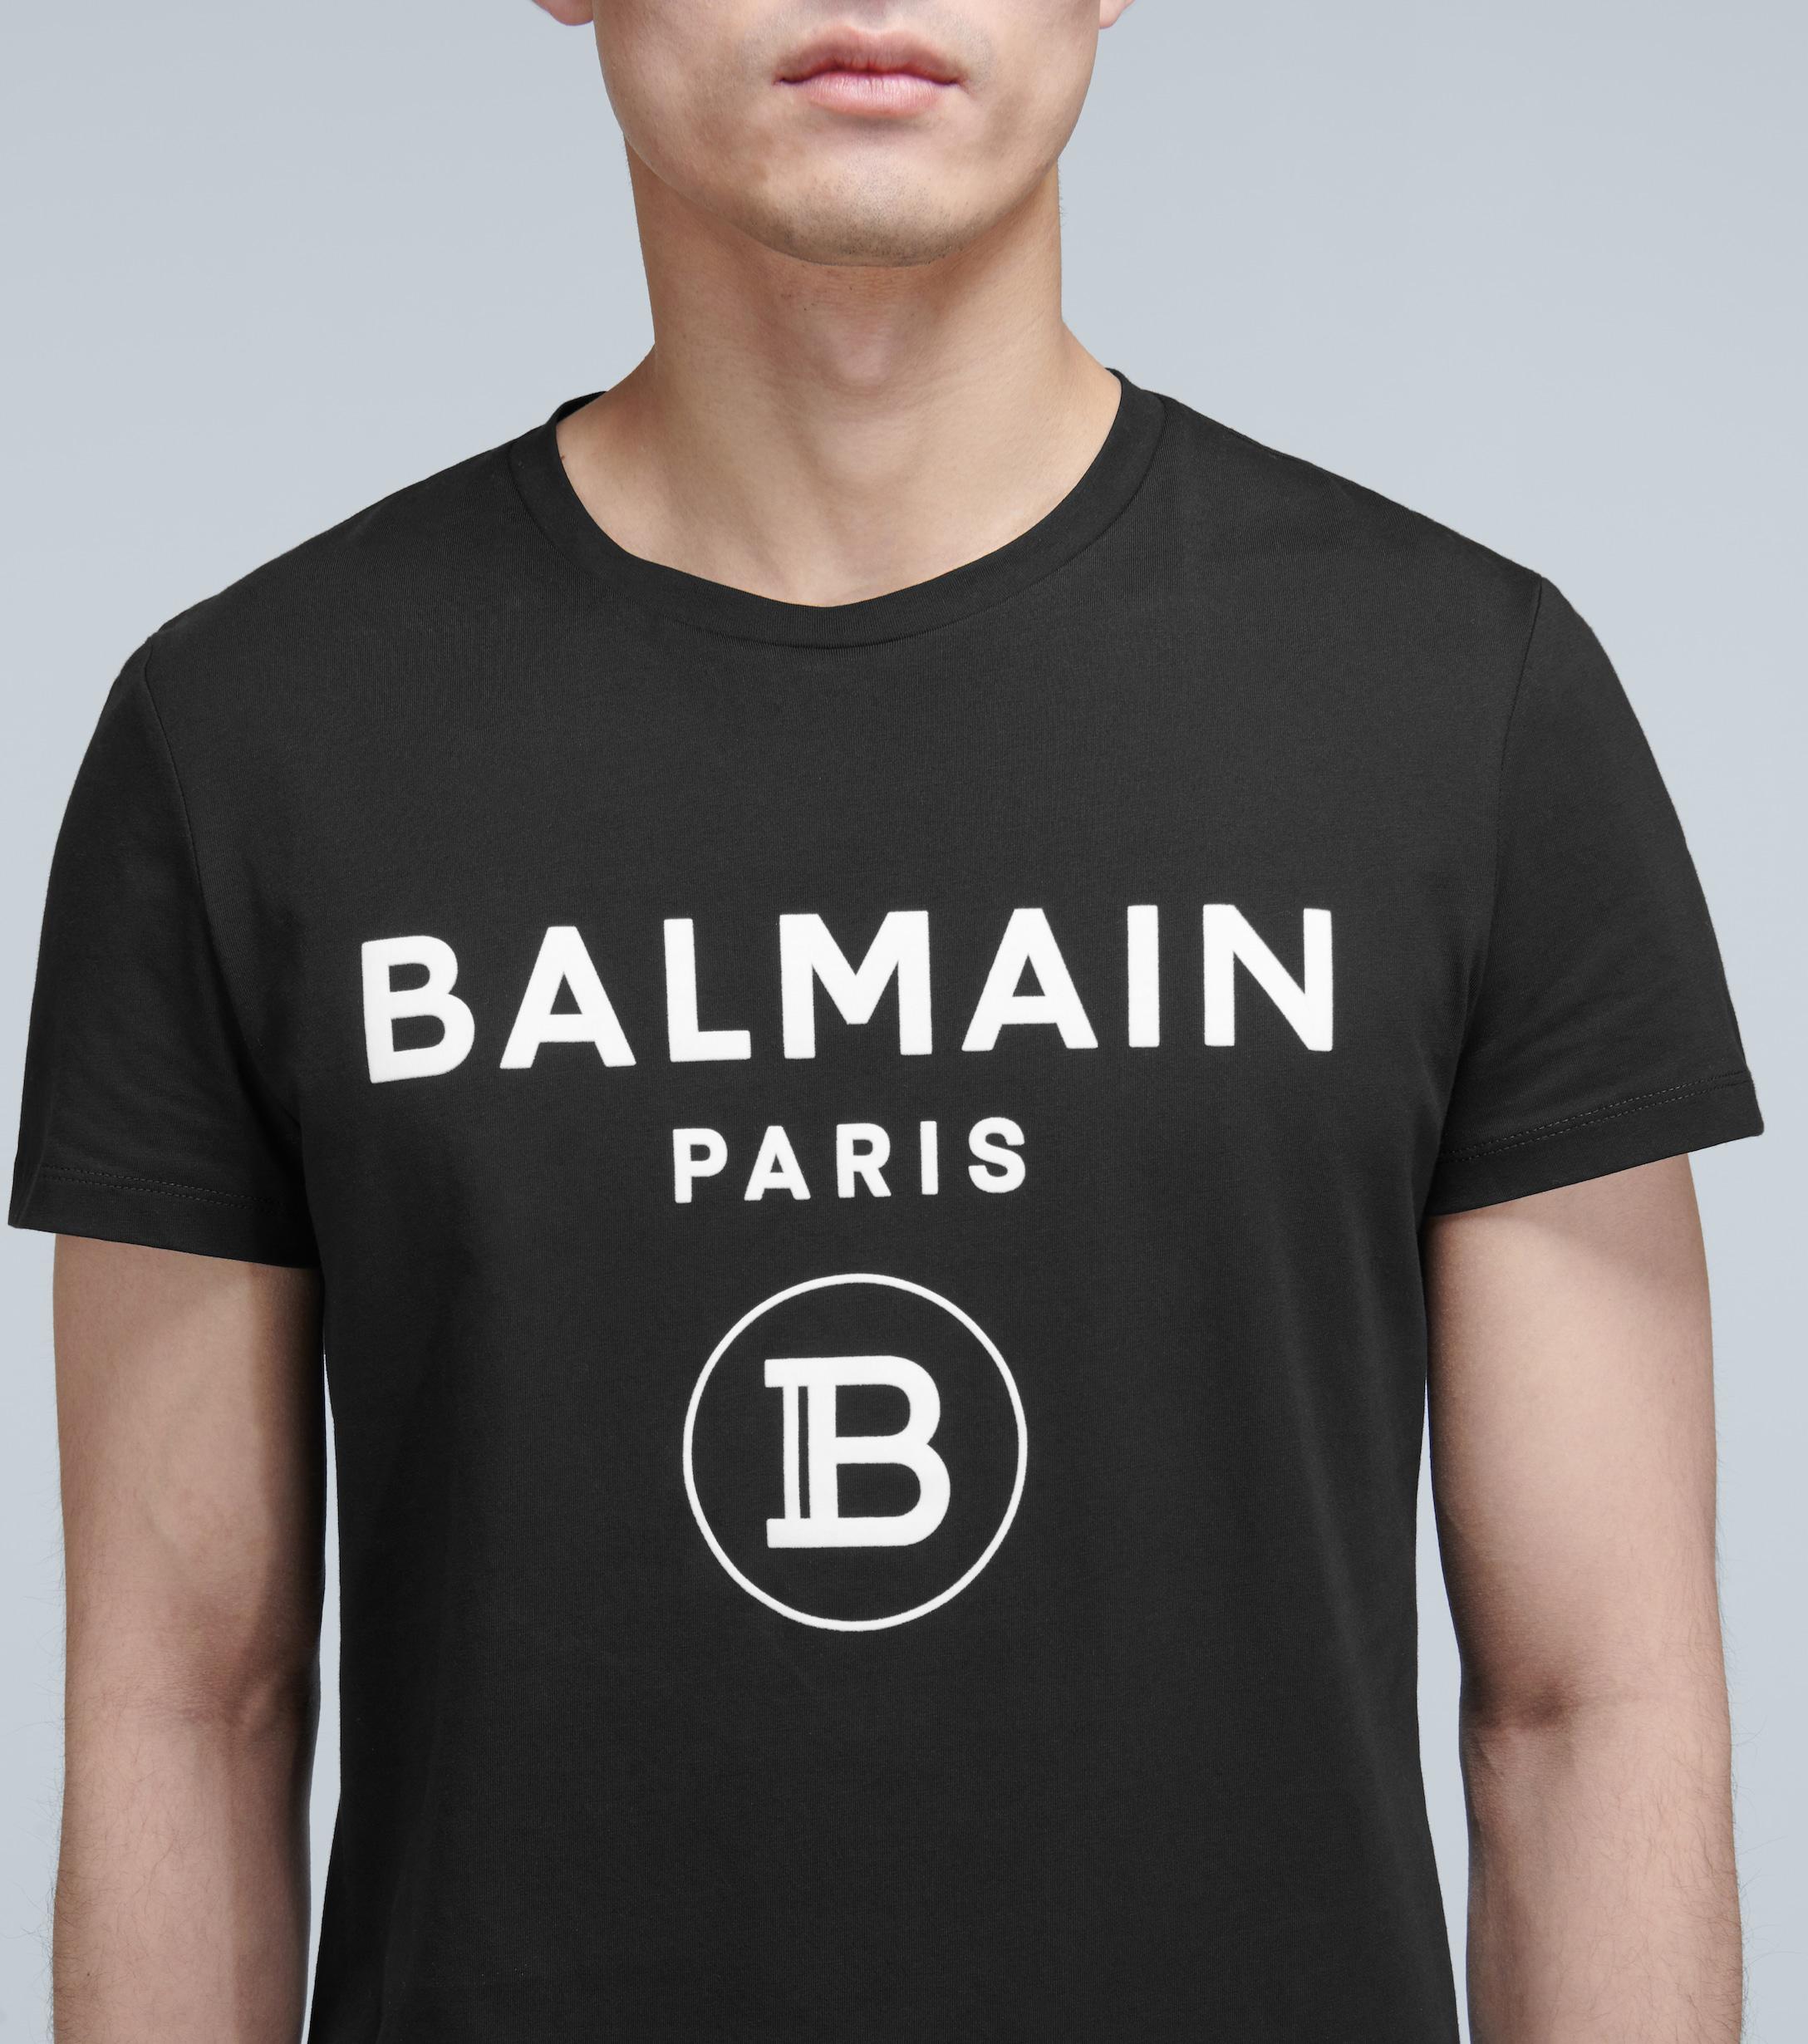 Balmain Foil Logo T Shirt in Black for Men - Save 60% - Lyst